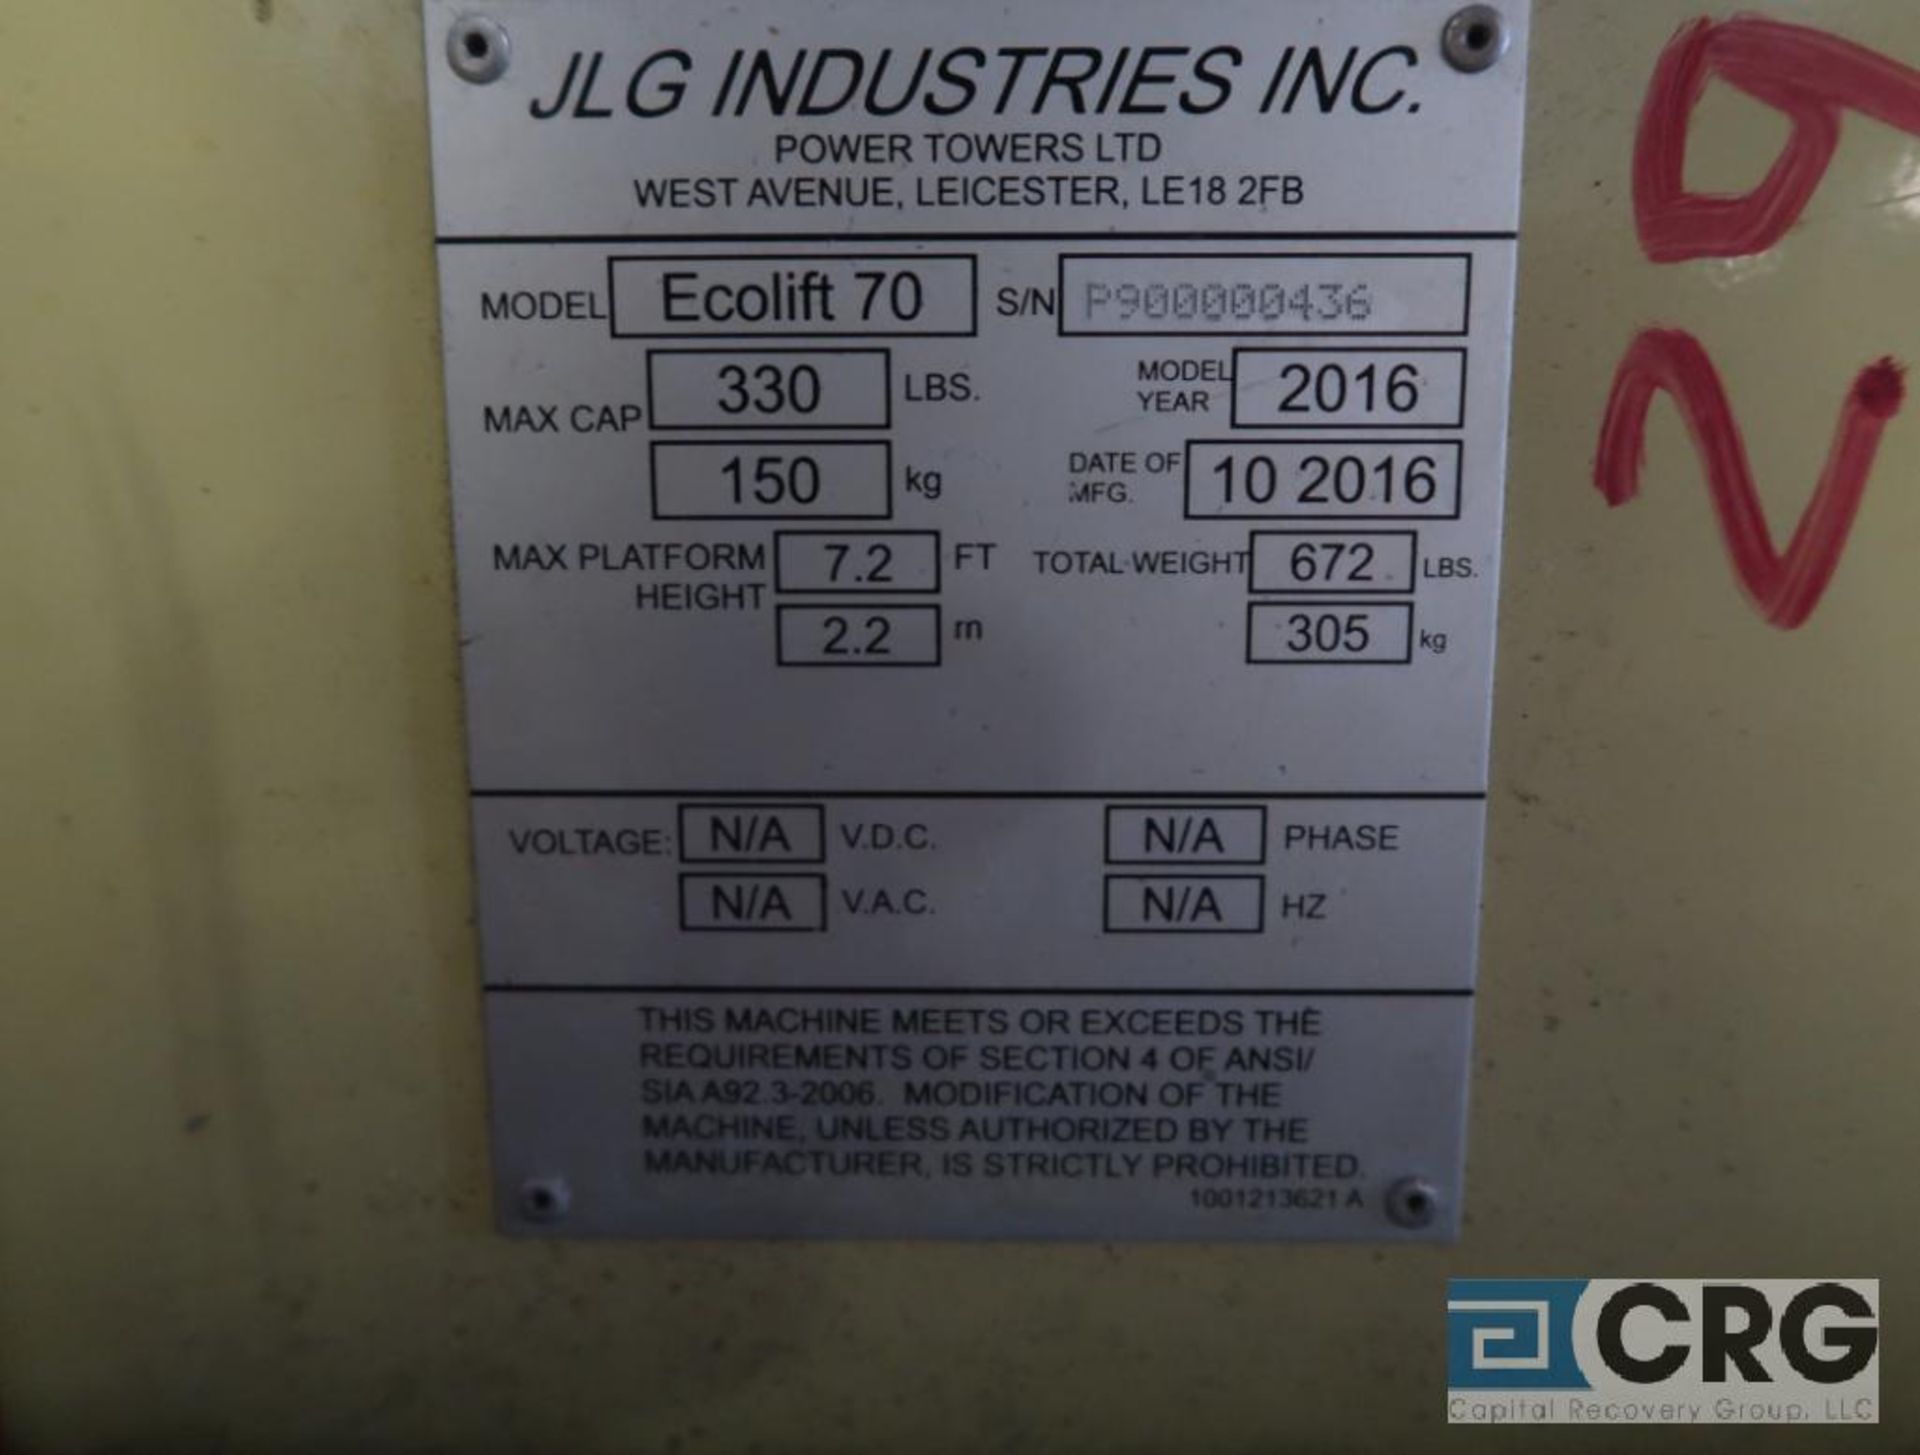 2016 JLG ECO 70 manlift, 330 lb. cap., platform height 7.2 ft., manual, s/n P900000436 (Lower Wood - Image 2 of 2